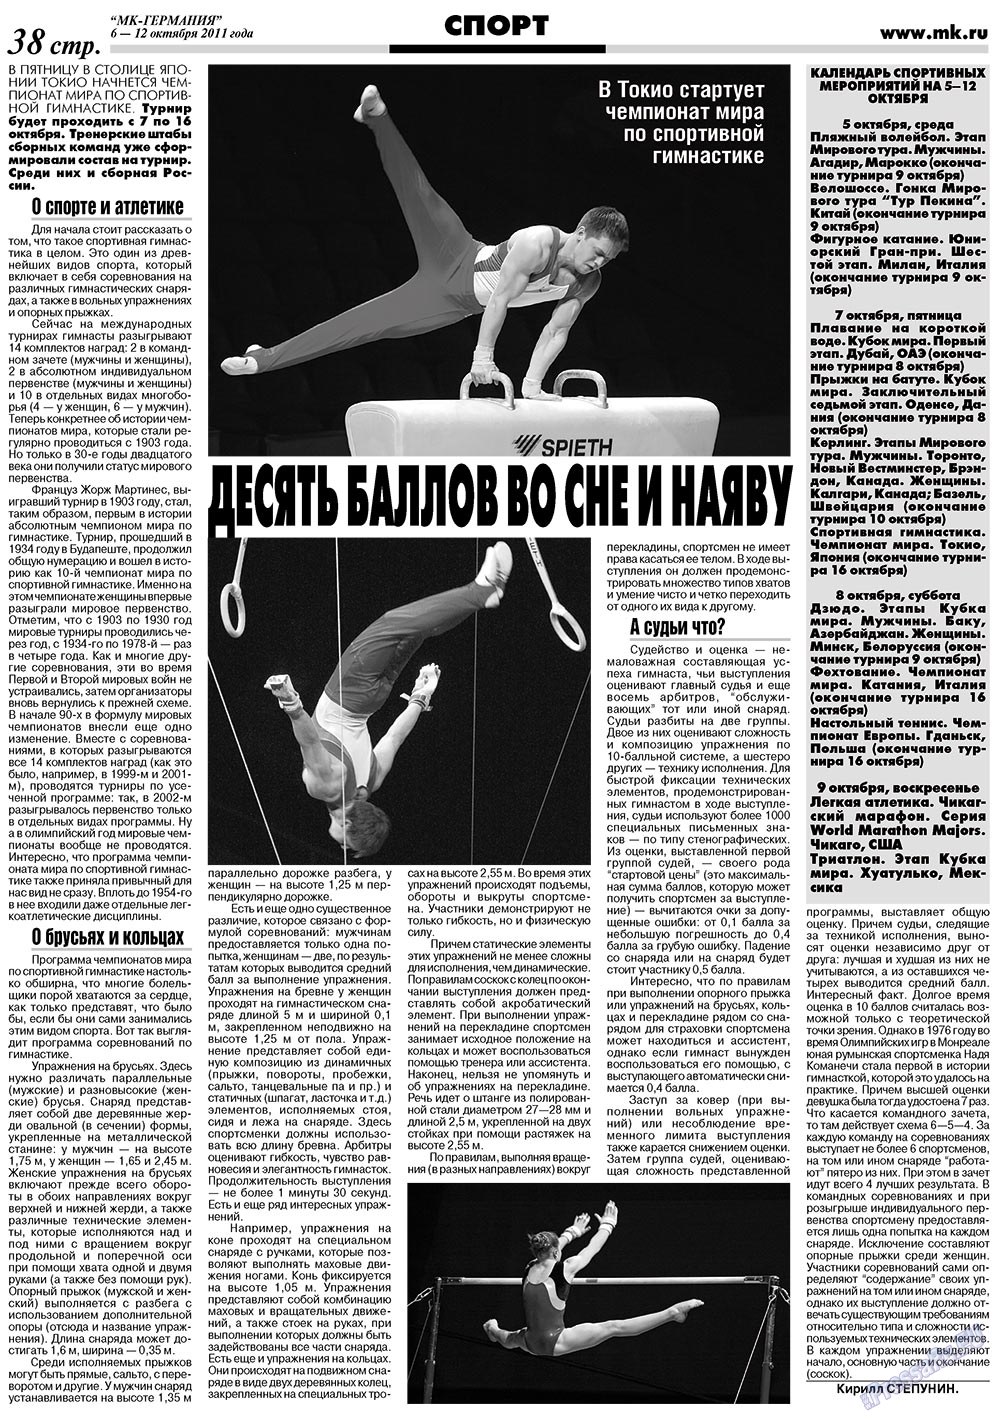 МК-Германия, газета. 2011 №40 стр.38